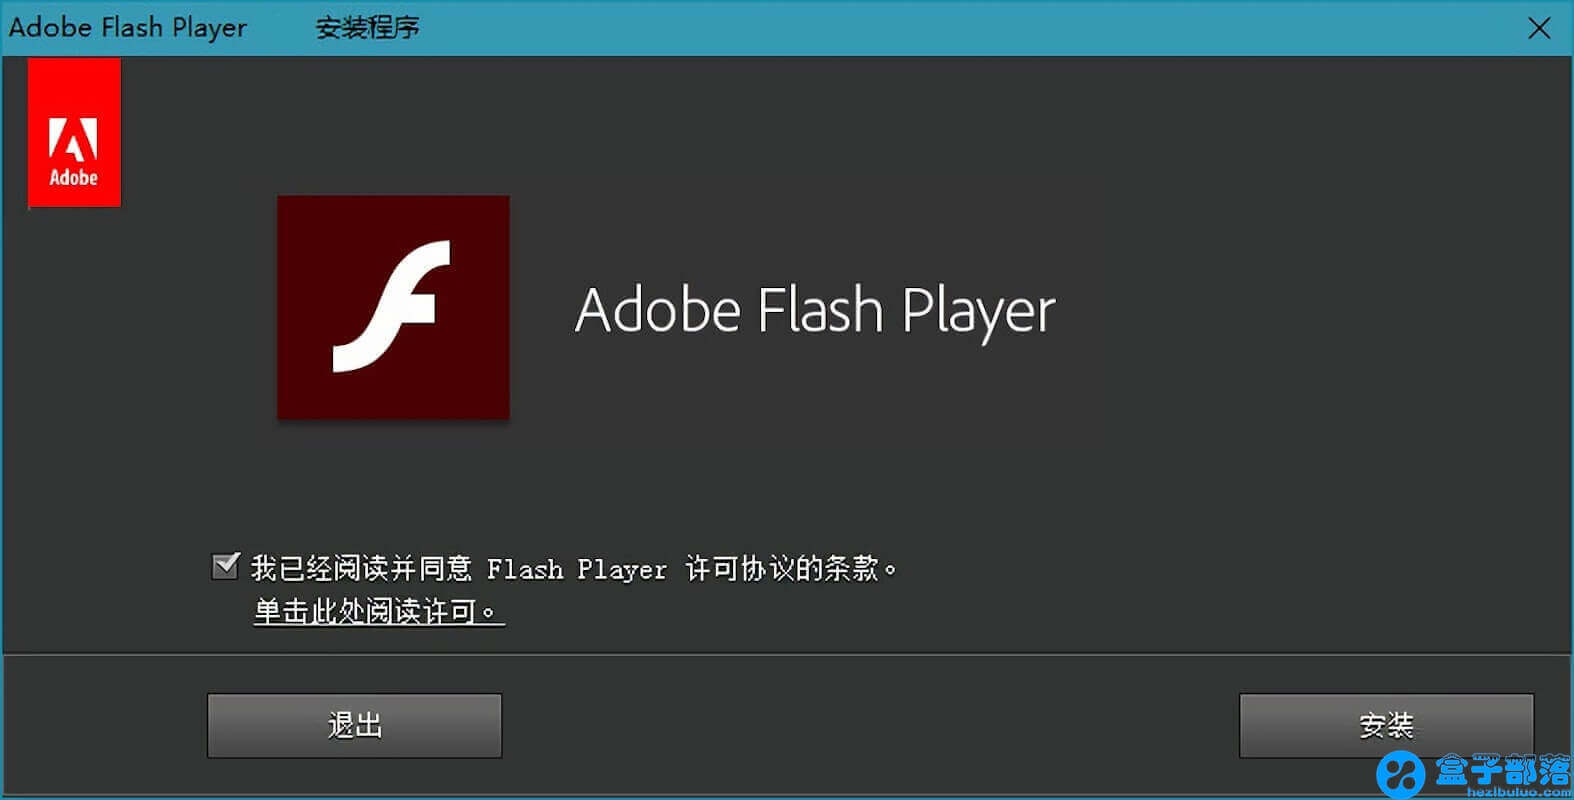 Adobe Flash Player 32.0.0.270 多媒体播放器静默直装版